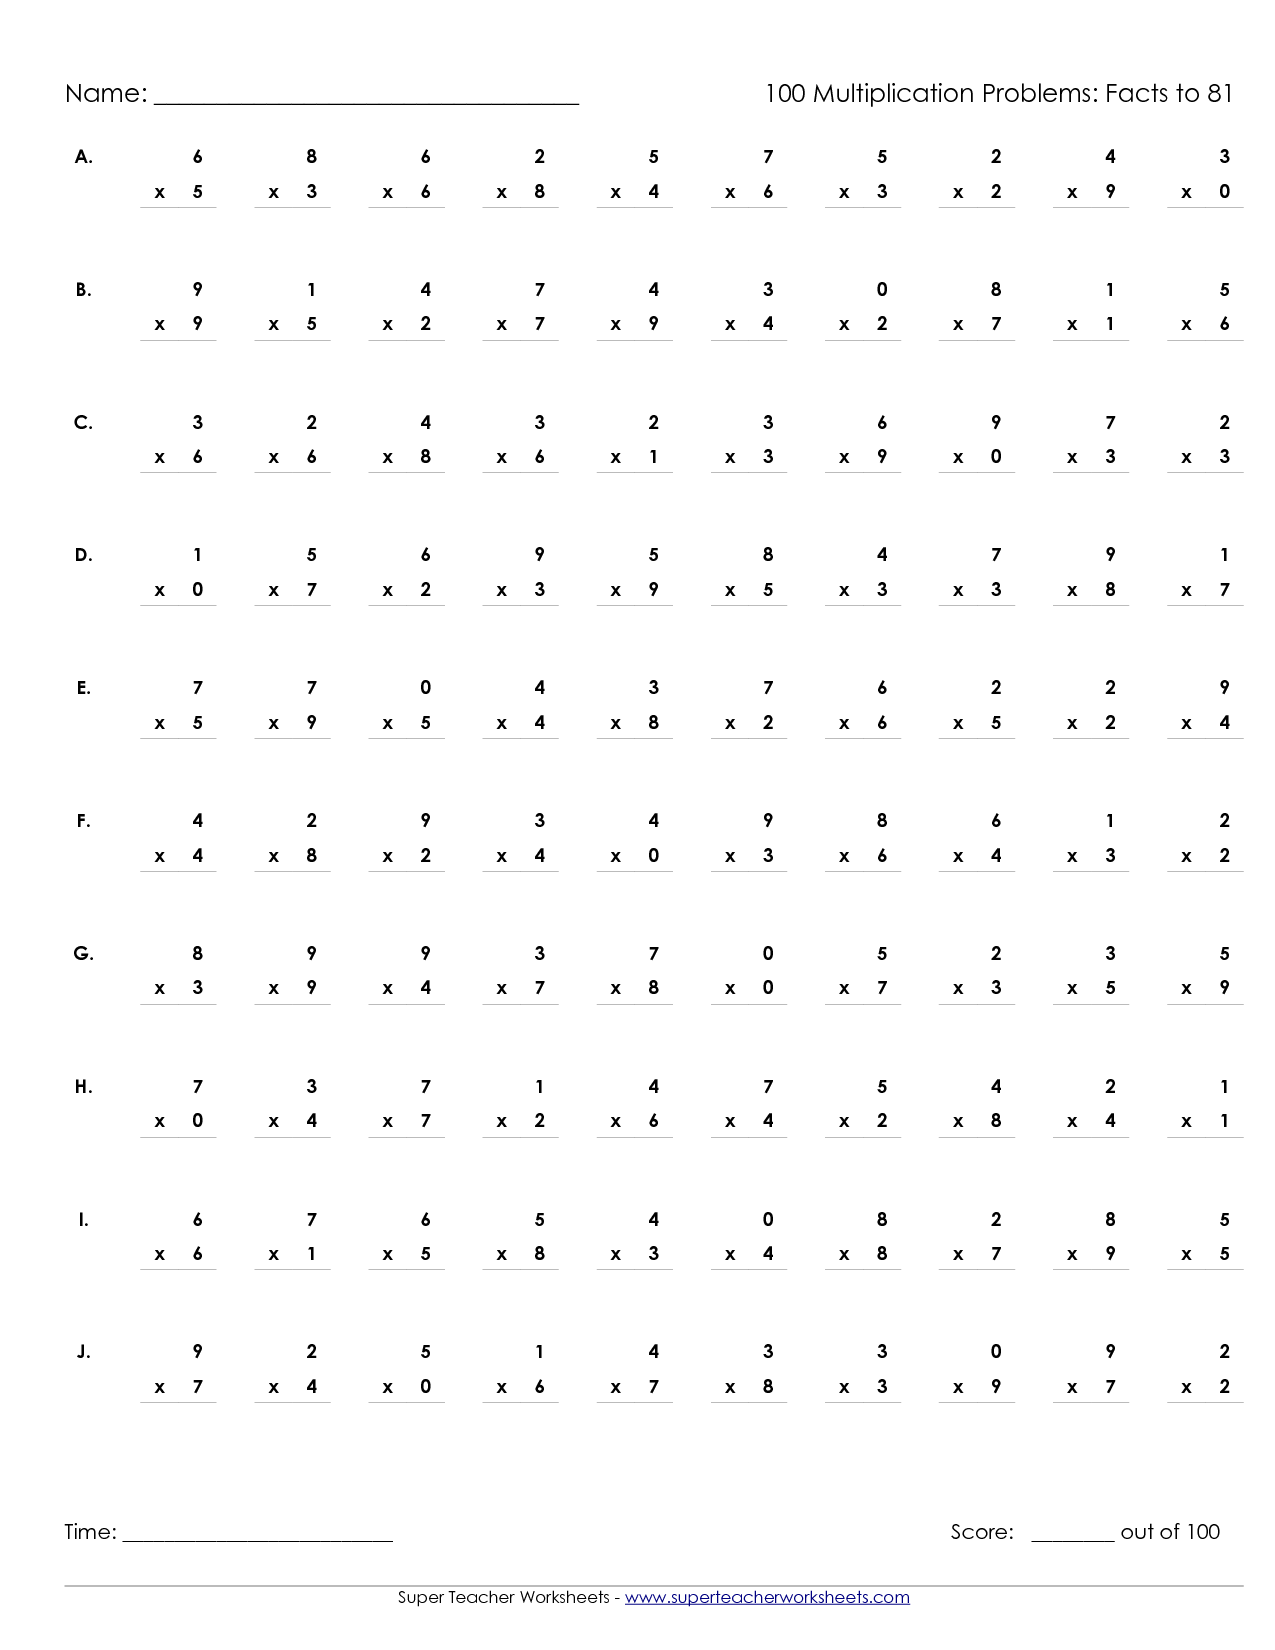 Printable Multiplication Worksheets 100 Problems Image